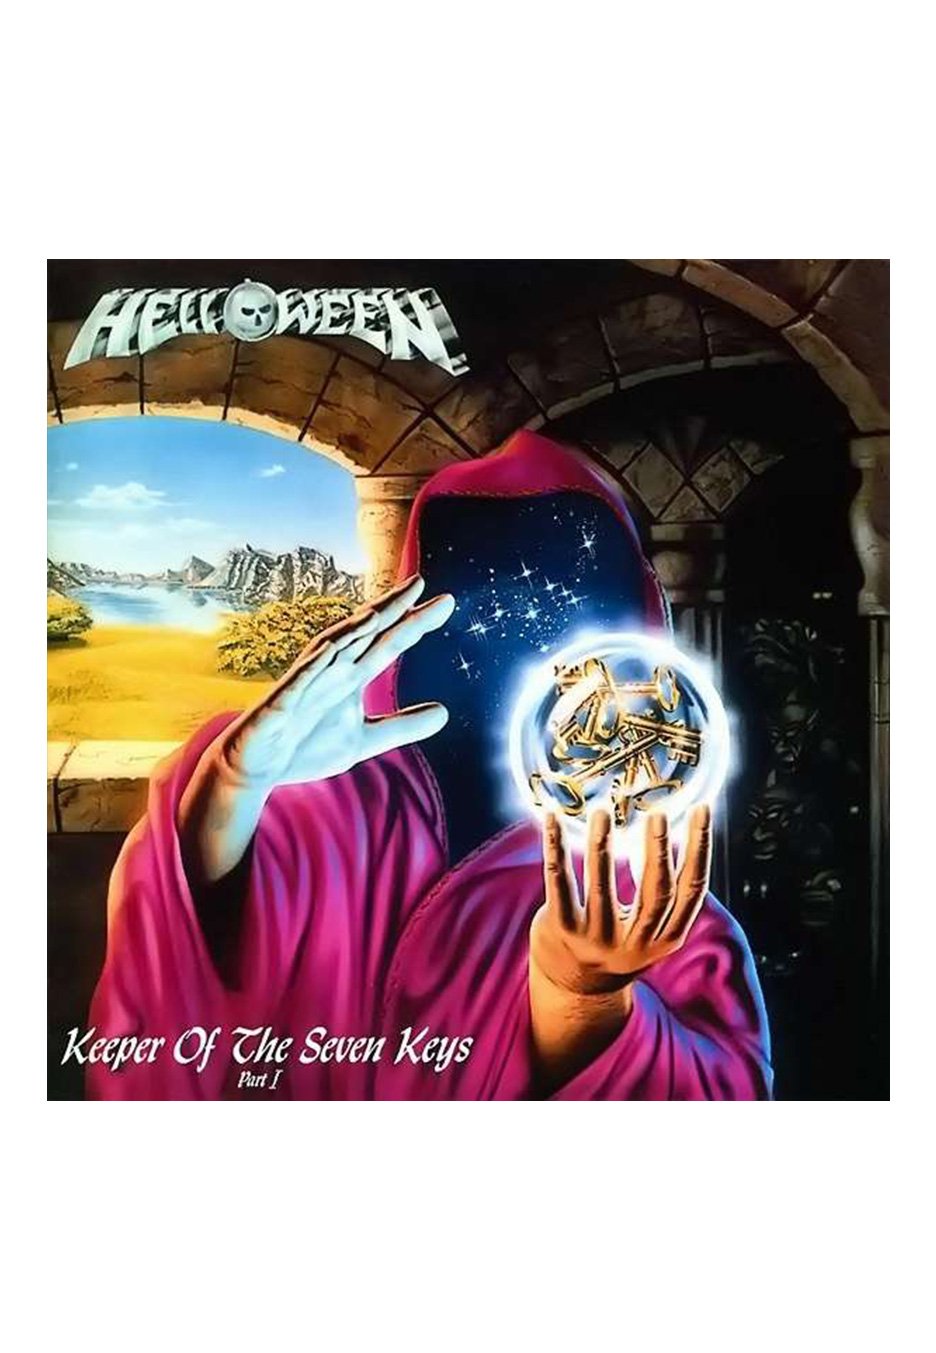 Helloween - Keeper Of The Seven Keys, Pt. 1 - Vinyl